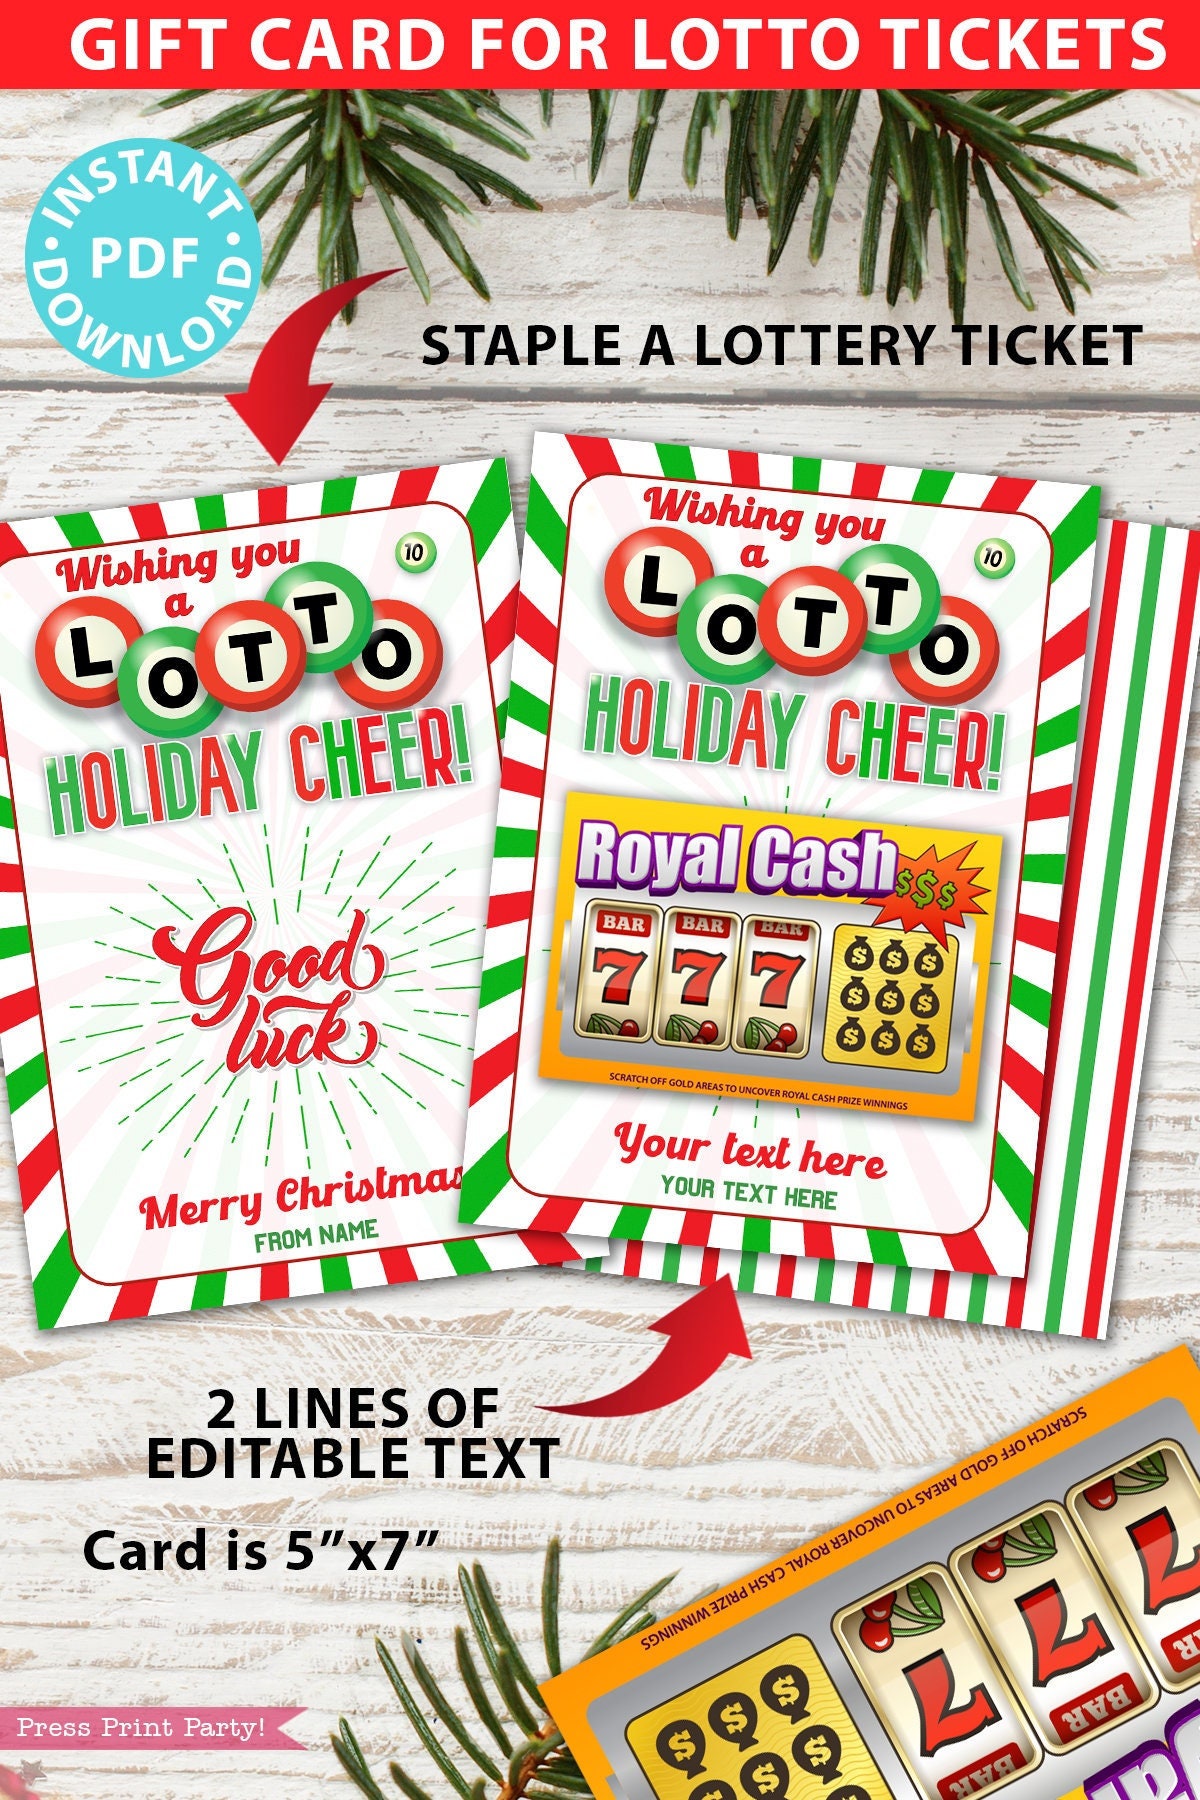  StoreSMART - Lotto Ticket Holders 5-Pack - Plastic